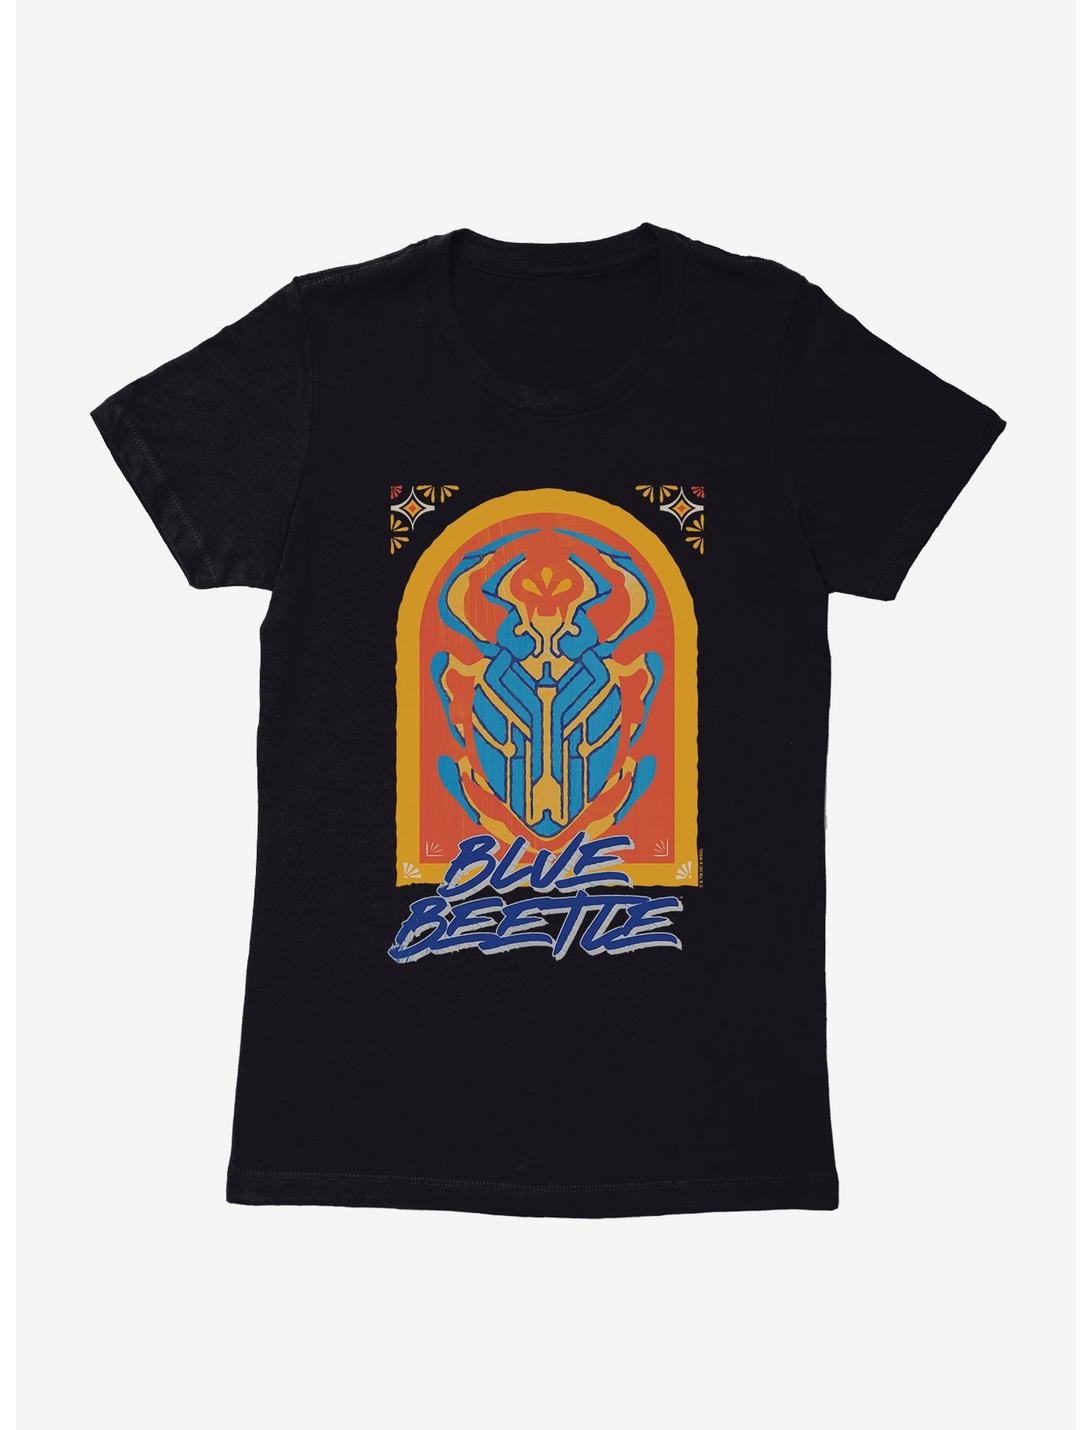 Blue Beetle Scarab Tile Womens T-Shirt, , hi-res